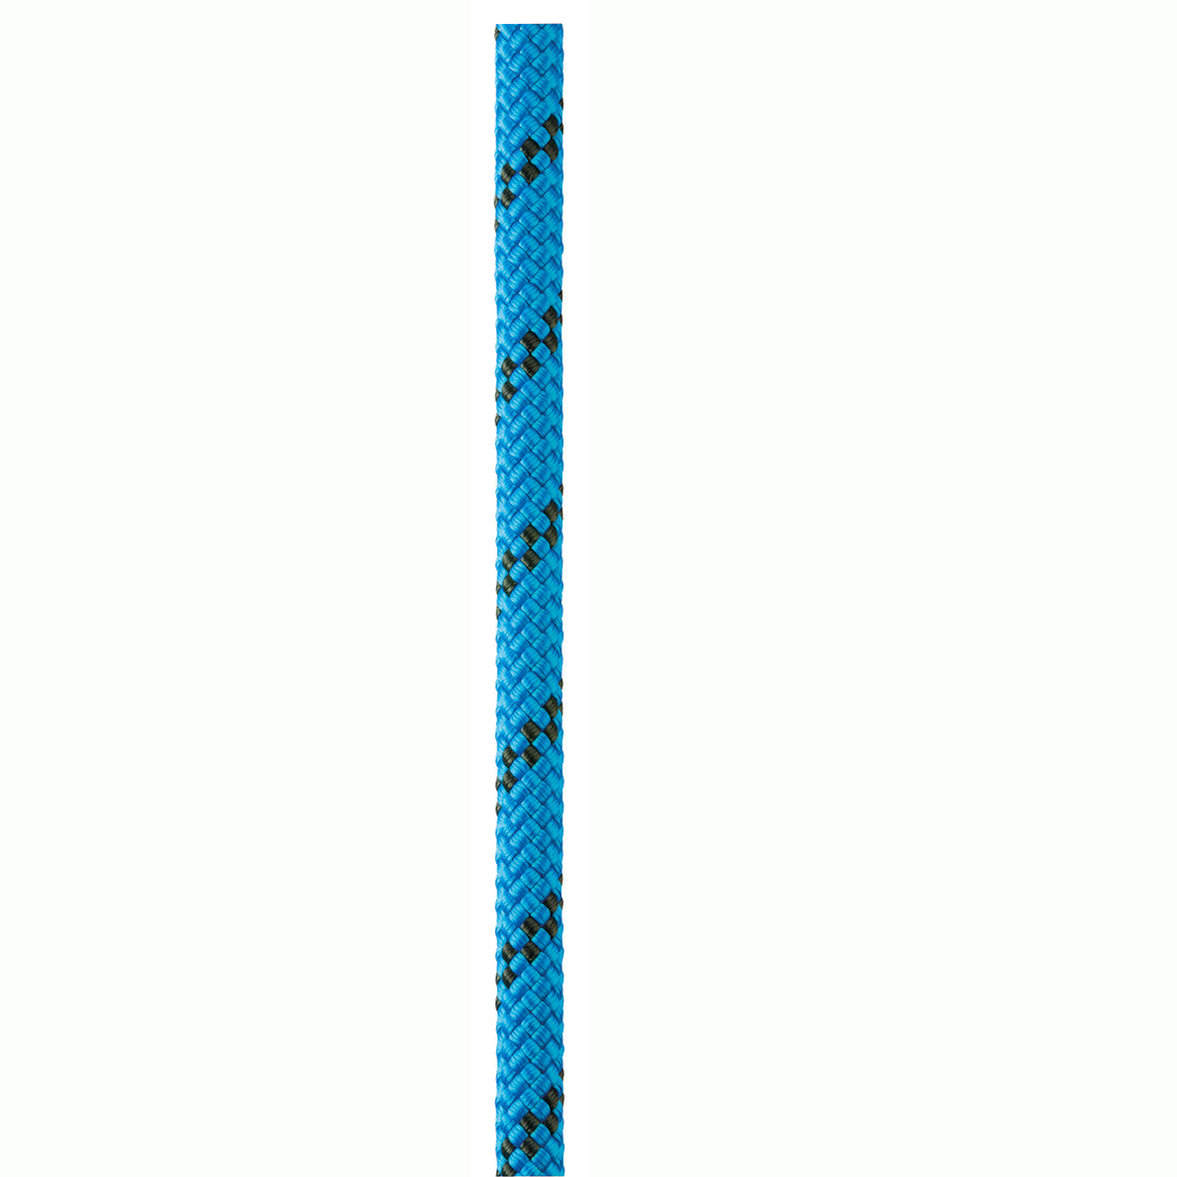 Halbstatisches Petzl-Seil AXIS 11mm  blau per mtr.